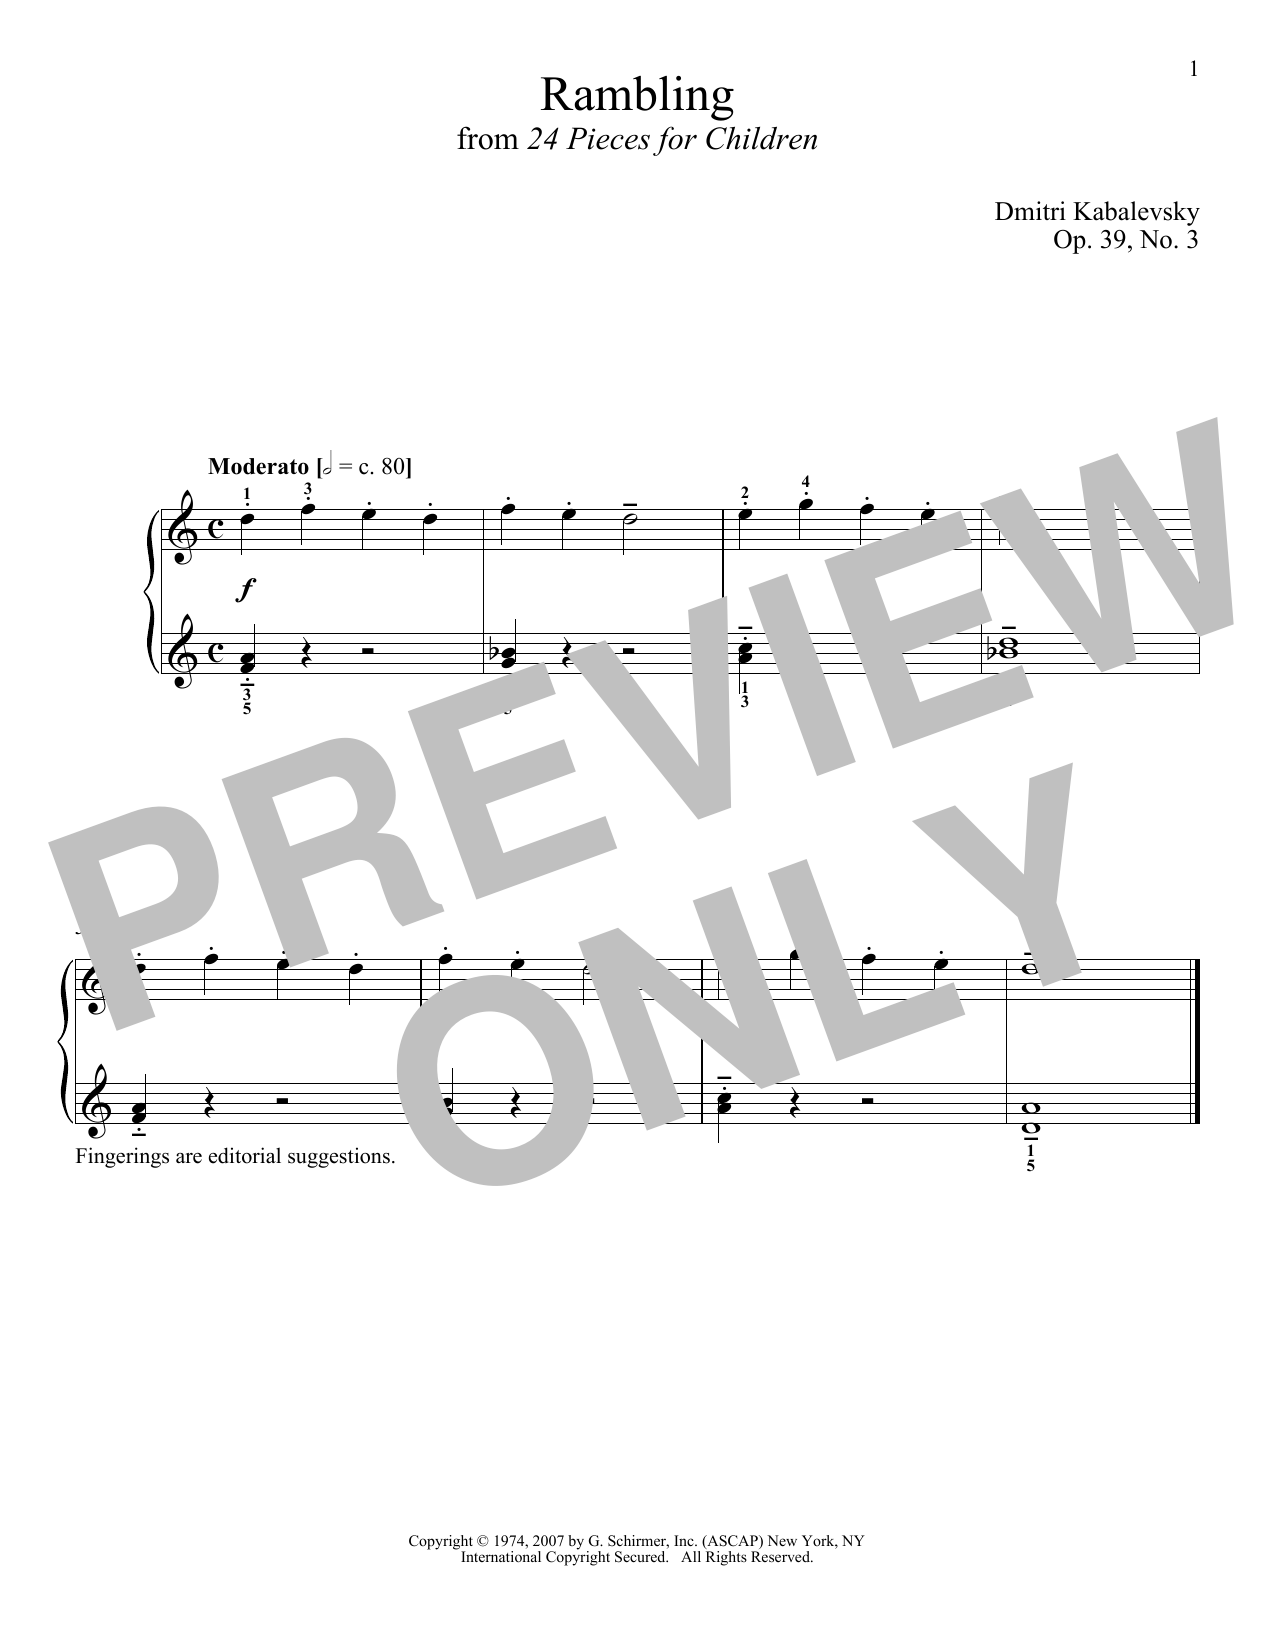 Dmitri Kabalevsky Rambling, Op. 39, No. 3 Sheet Music Notes & Chords for Piano - Download or Print PDF